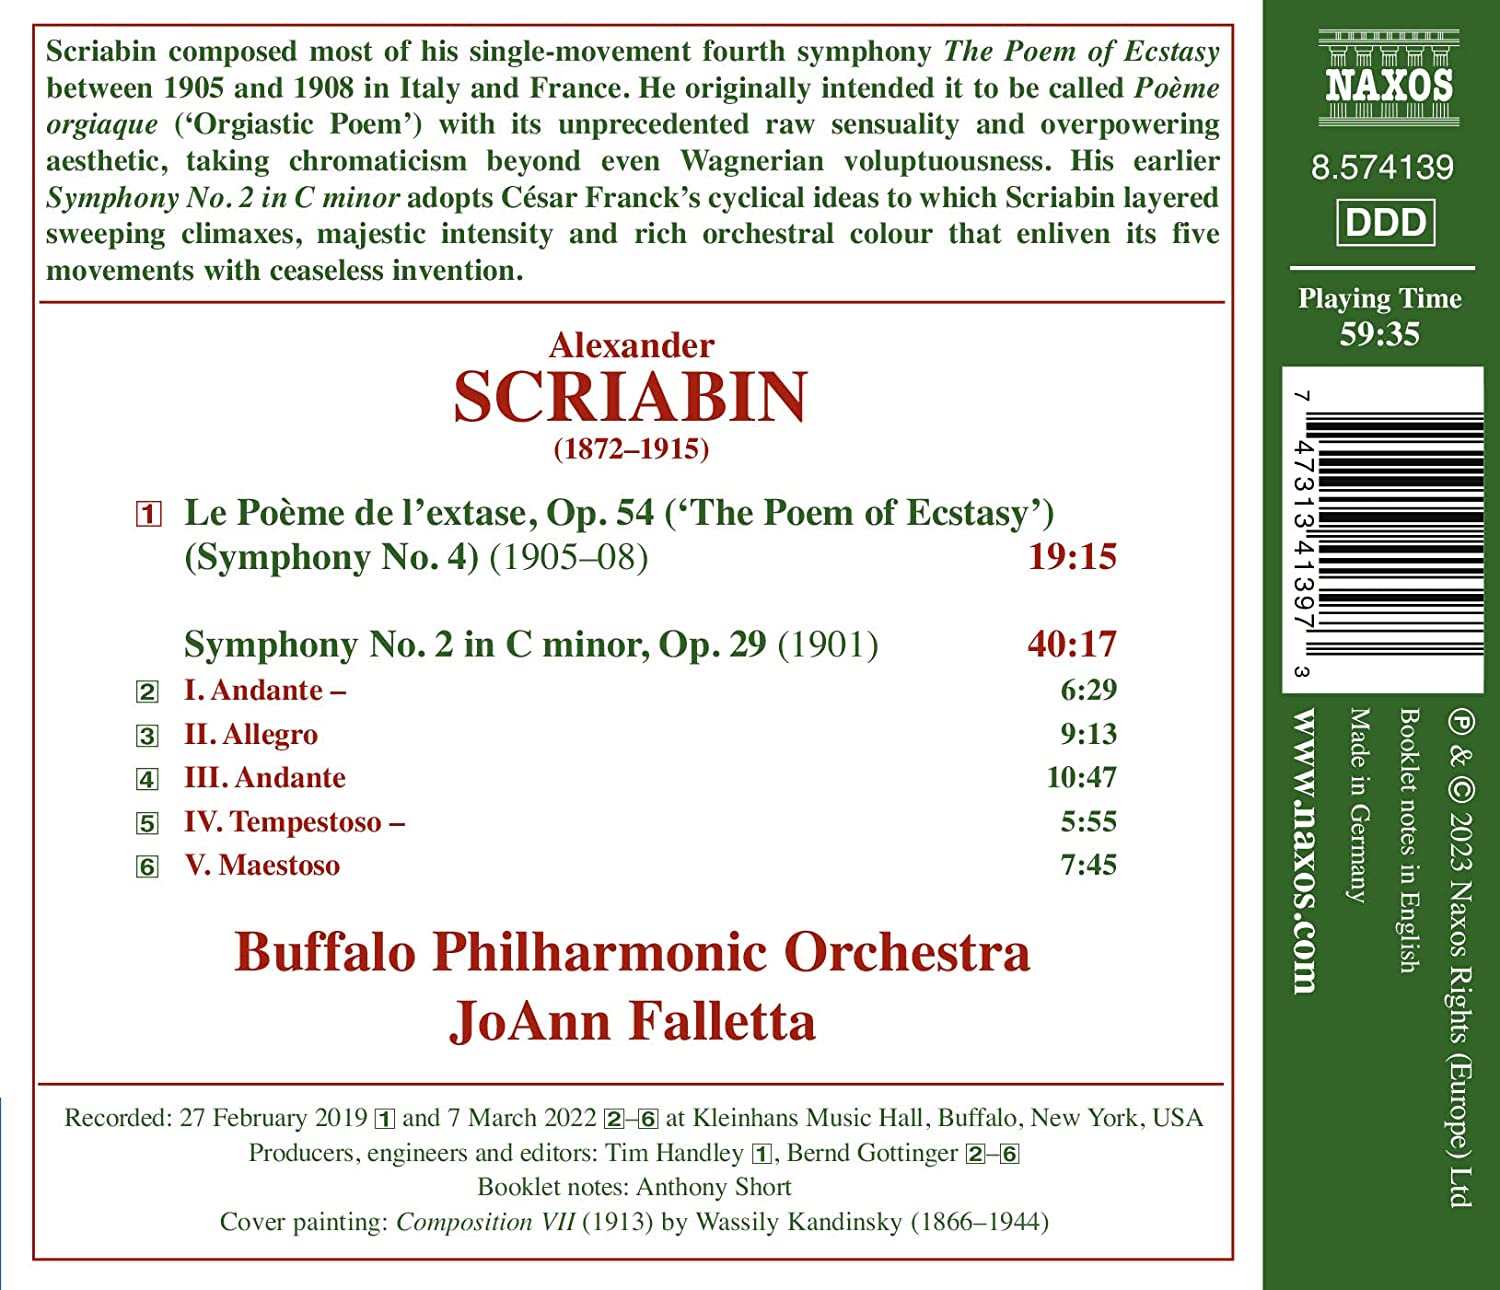 Joann Falletta 스크리아빈: ‘법열의 시’ & ‘교향곡 2번’ (Scriabin: The Poem of Ecstasy, Symphony No. 2)